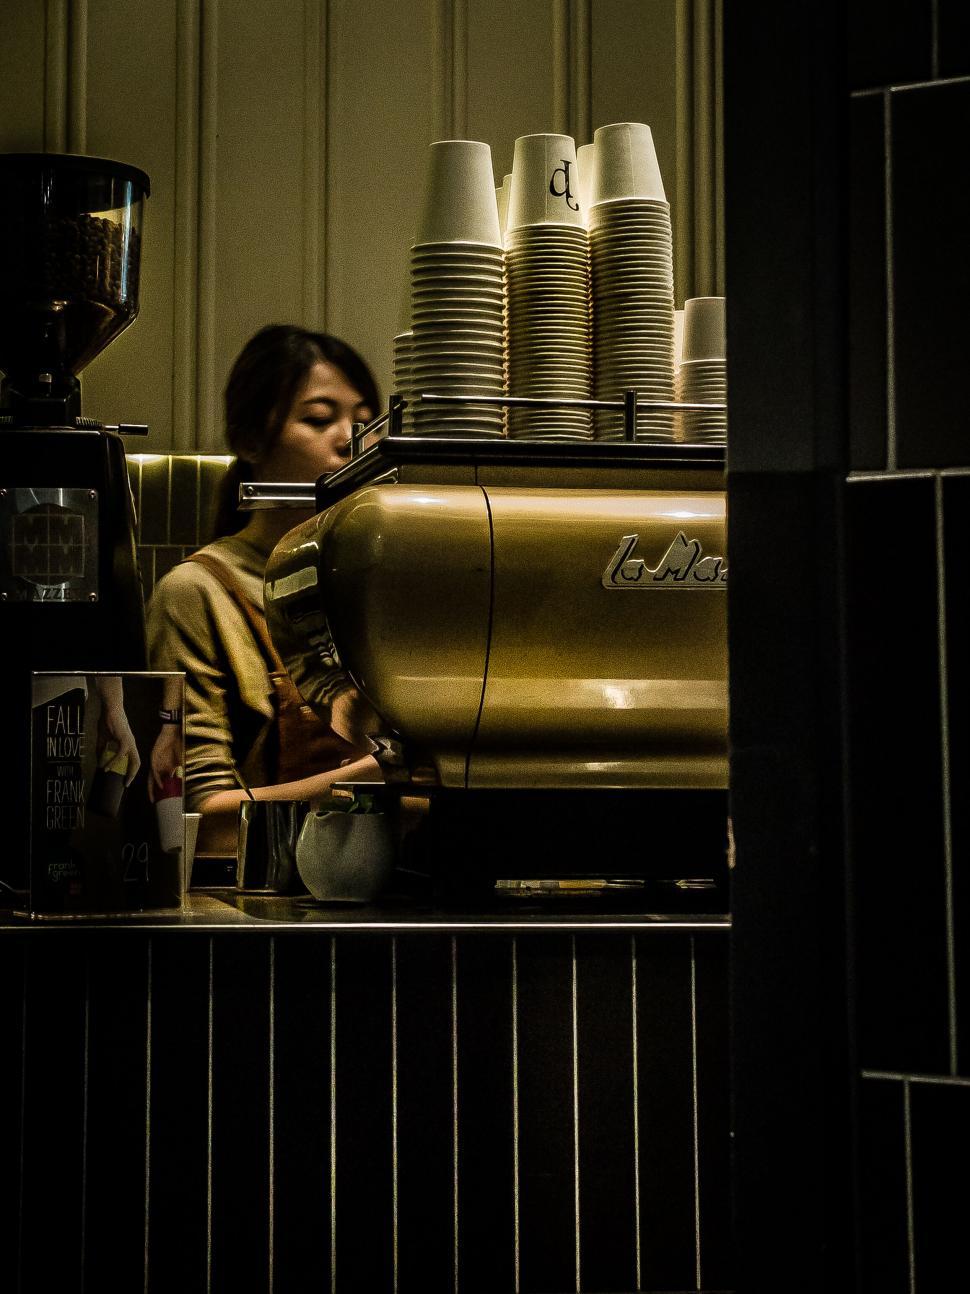 Free Image of Barista operating an espresso machine 